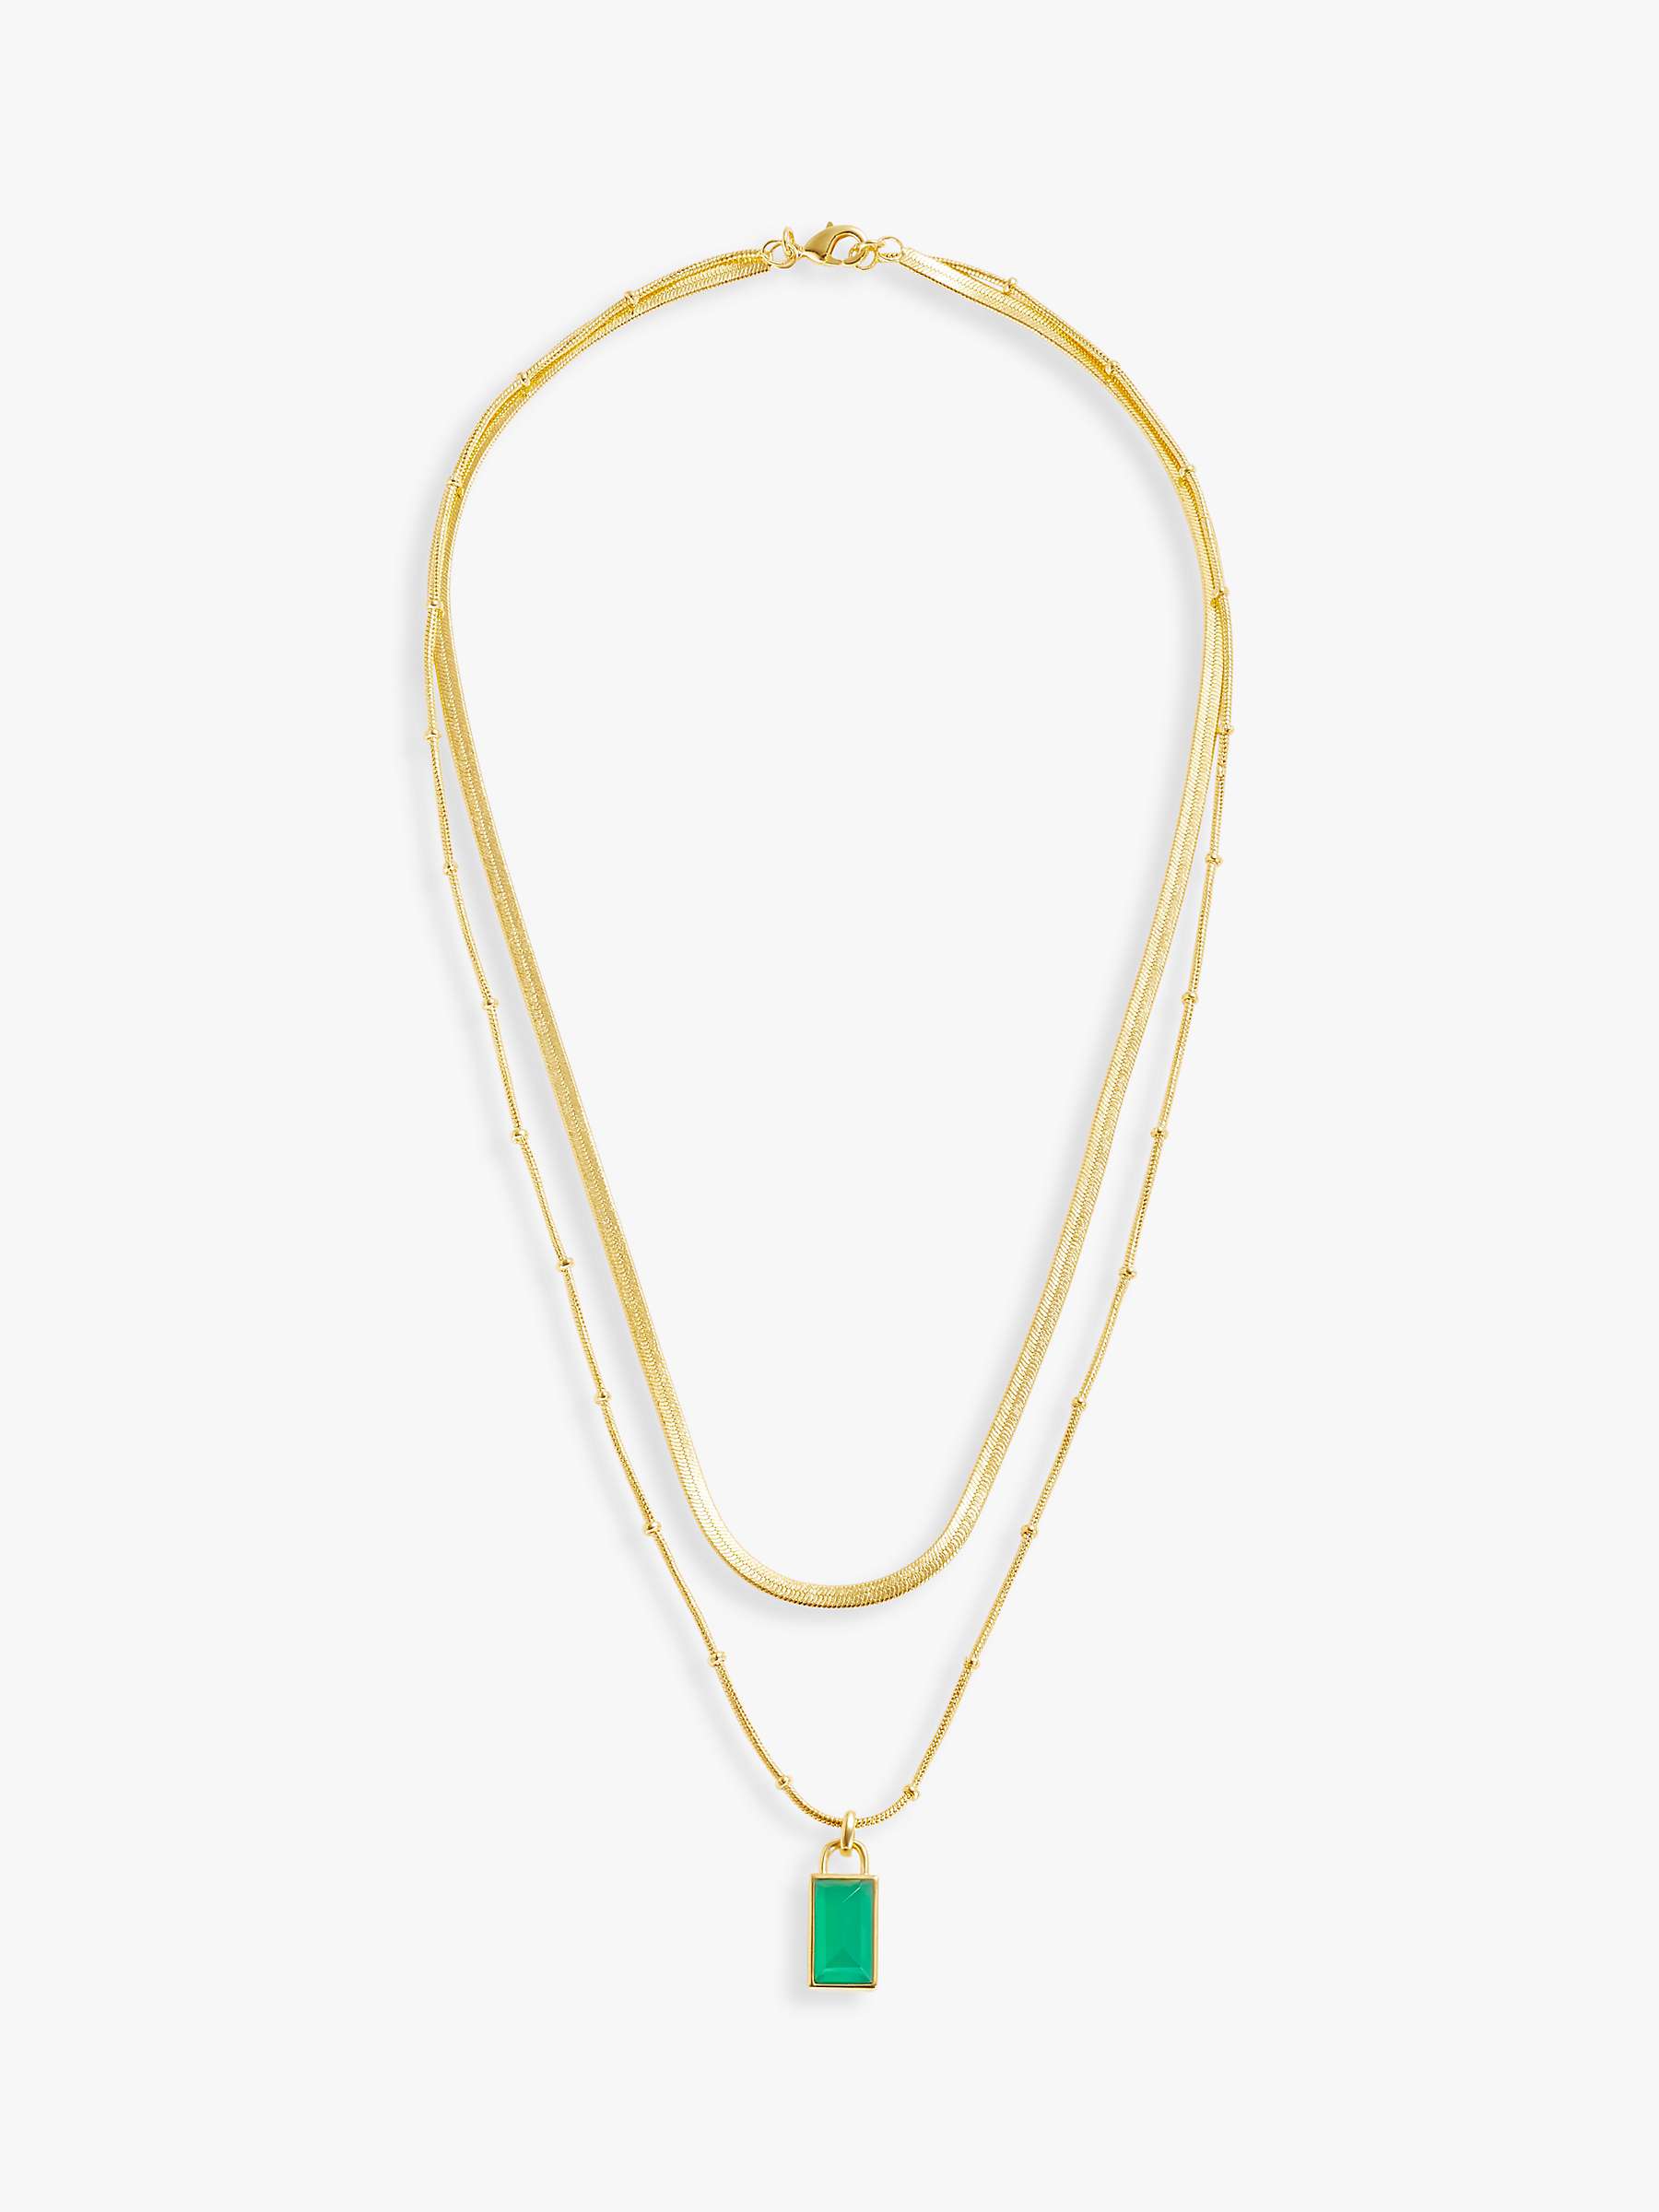 Buy John Lewis Gemstones Layered Chain Pendant Necklace Online at johnlewis.com